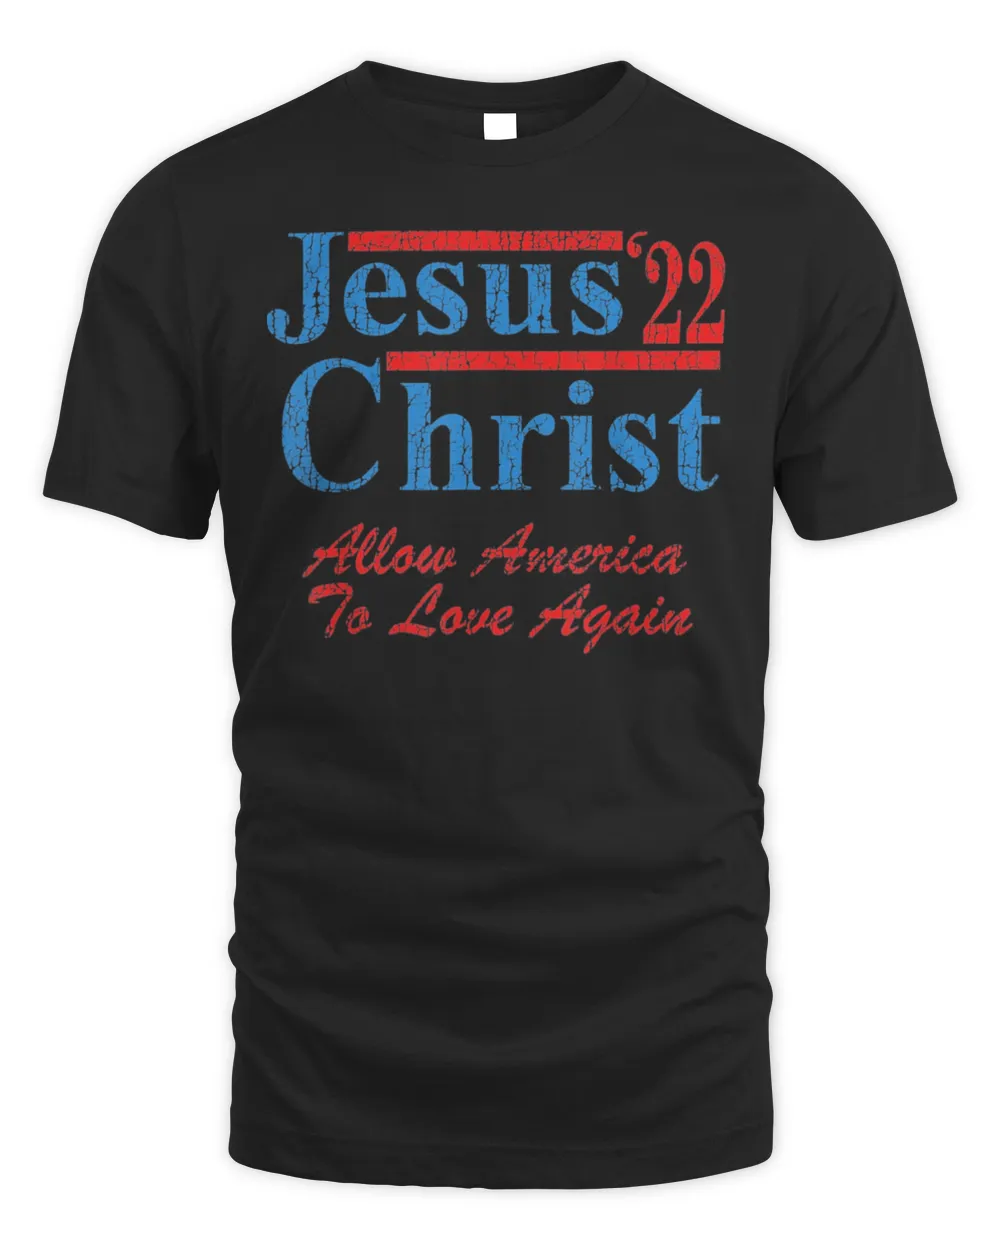 Vote for Jesus Christ for President 2022 Election Christian T-Shirt